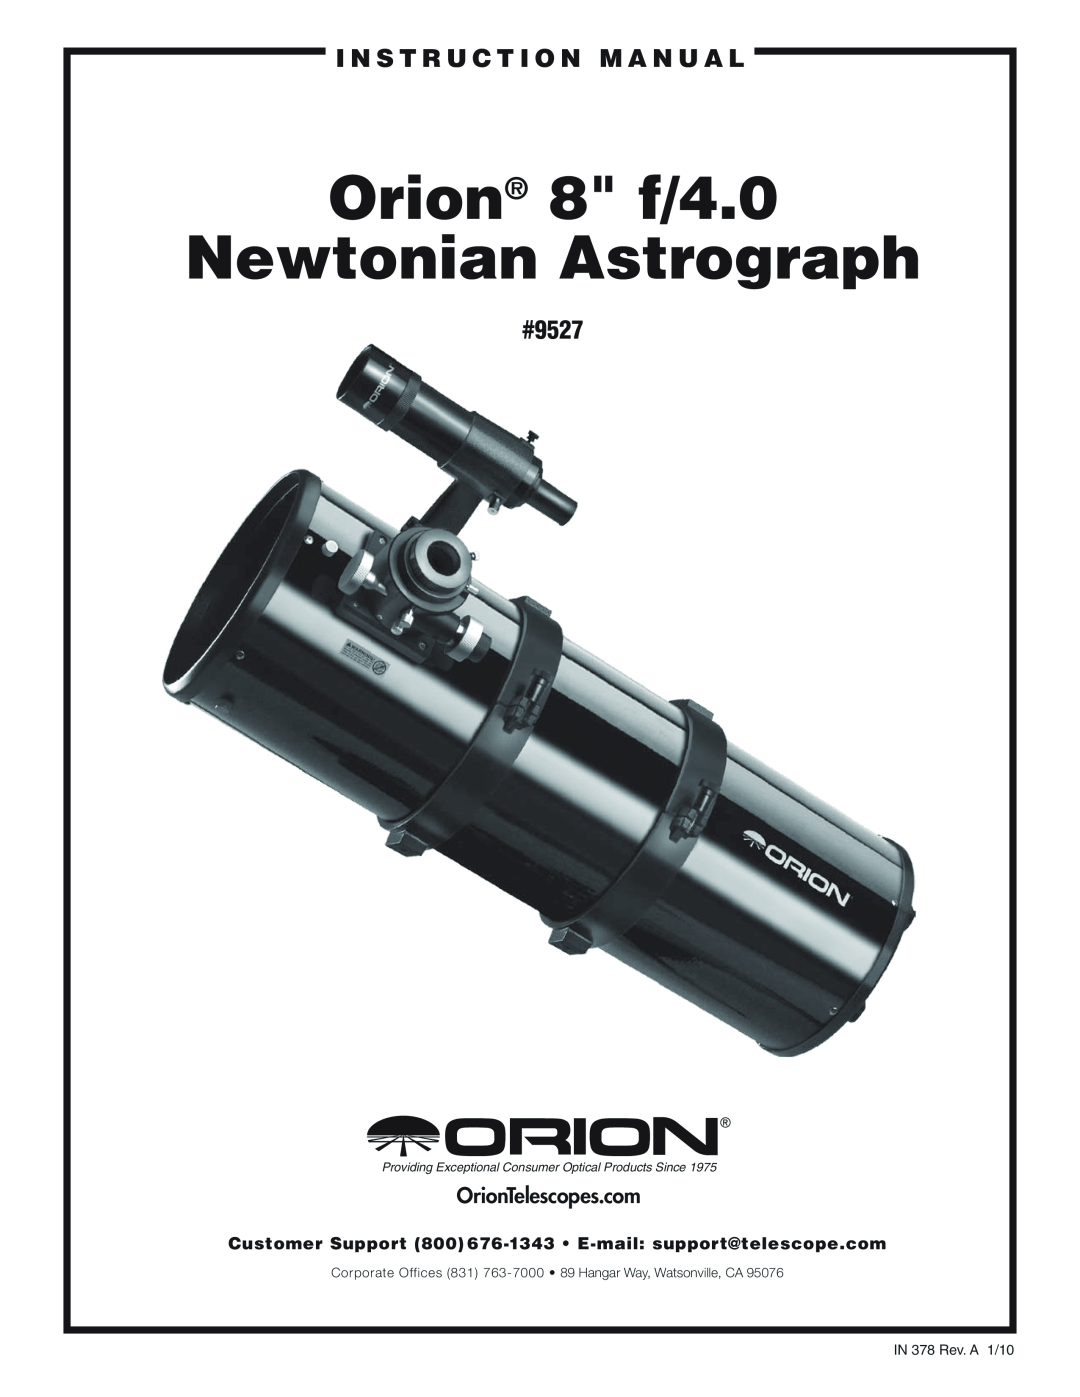 Orion instruction manual i n s t r u c t i o n M a n u a l, #9527, Orion 8 f/4.0 Newtonian Astrograph 